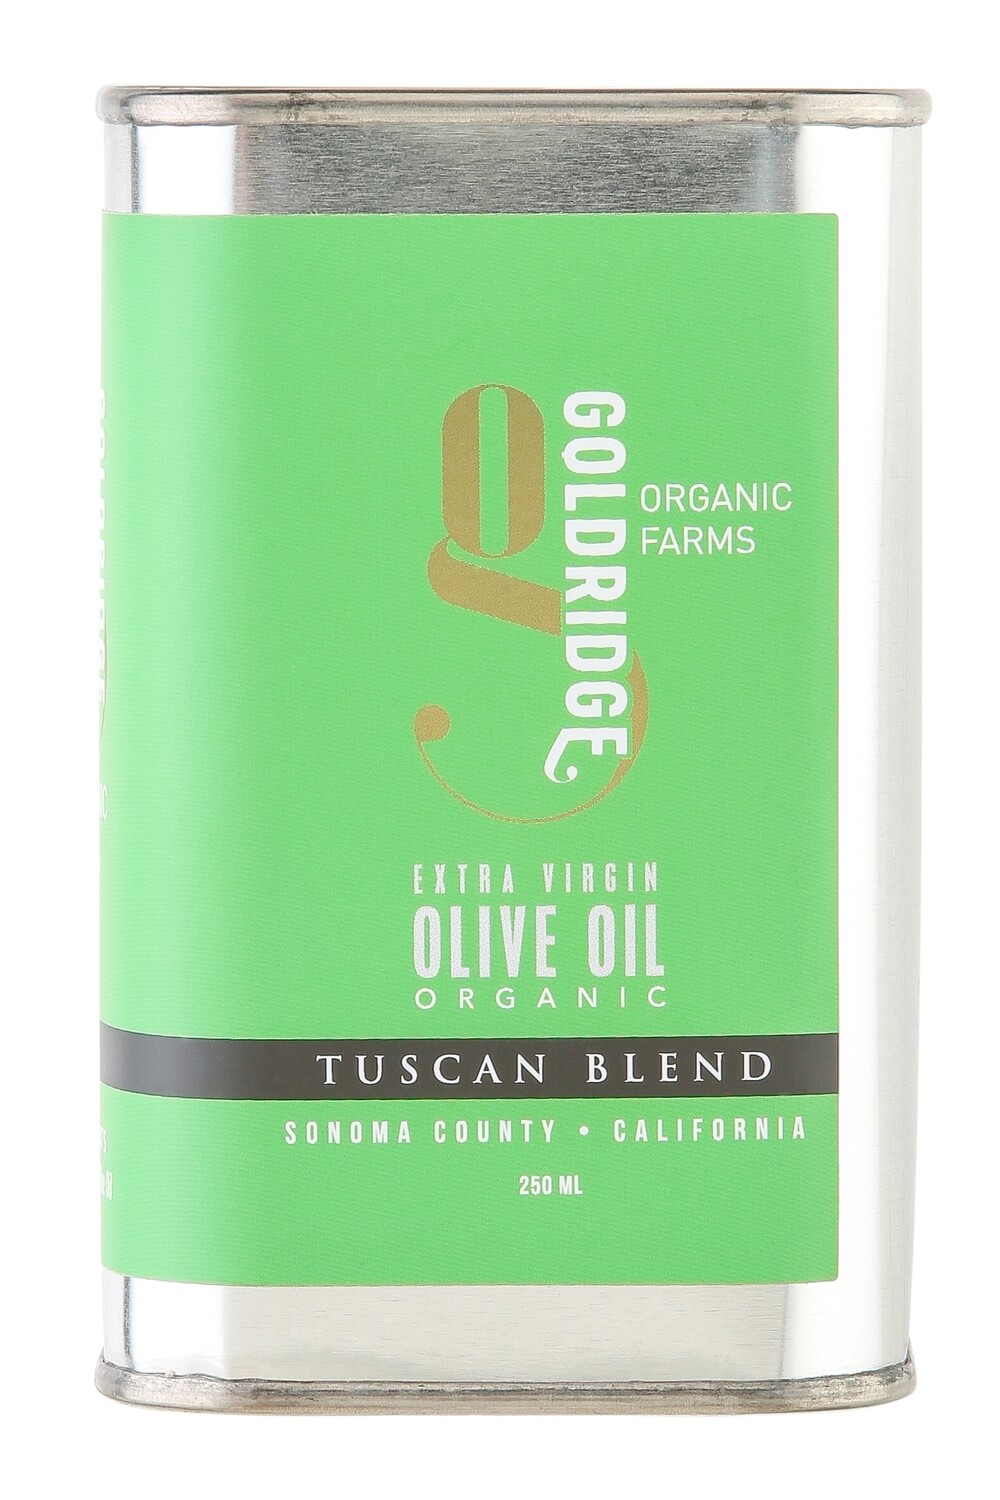 Tuscan Blend EVOO 250 ML Tin | ORGANIC California Olive Oil